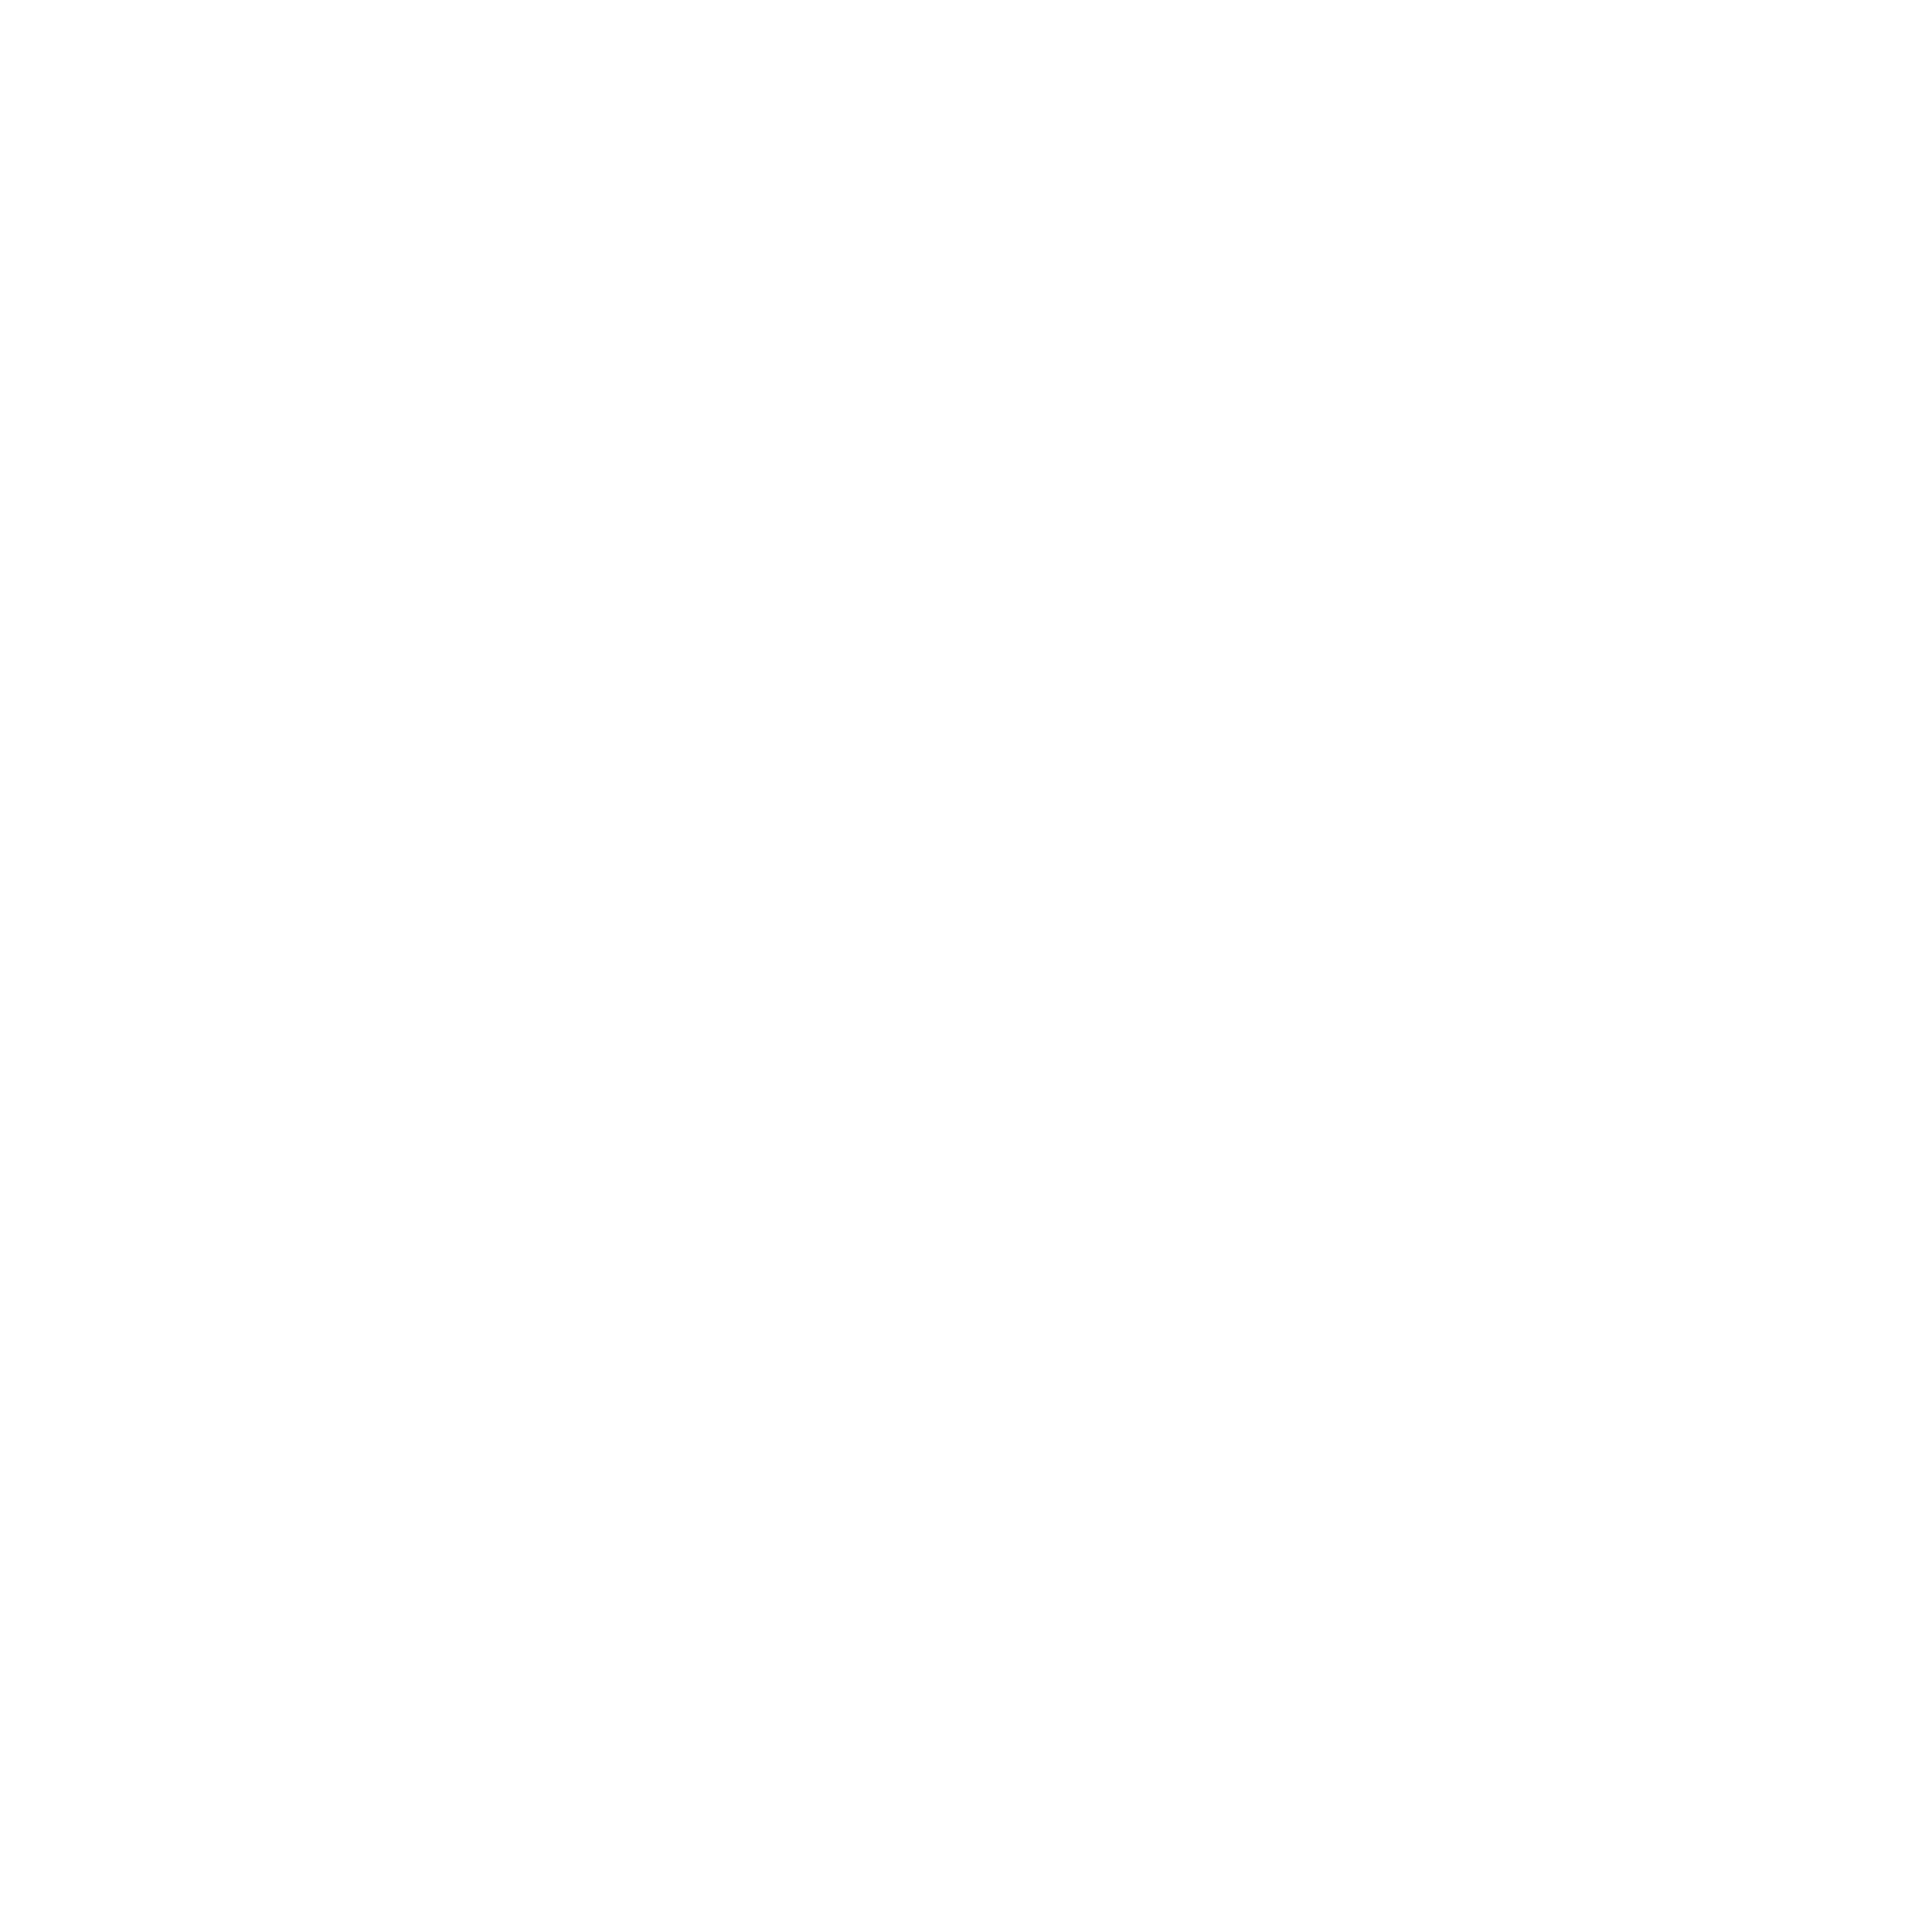 LTD Logo - Brand Resources - Party Rental Ltd.